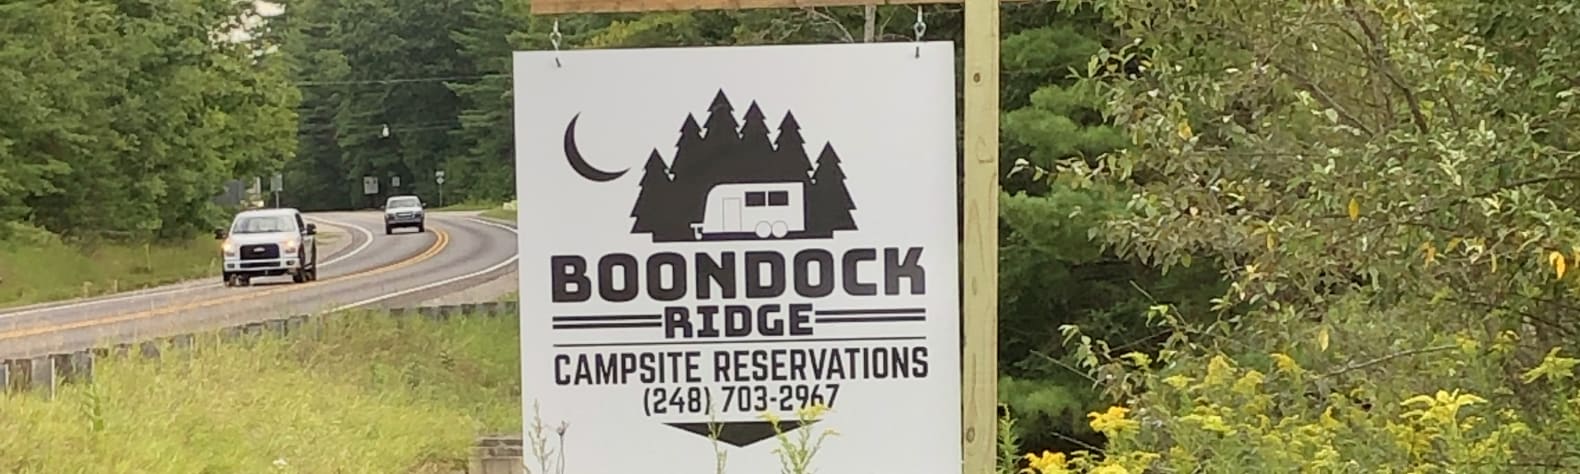 Boondock Ridge